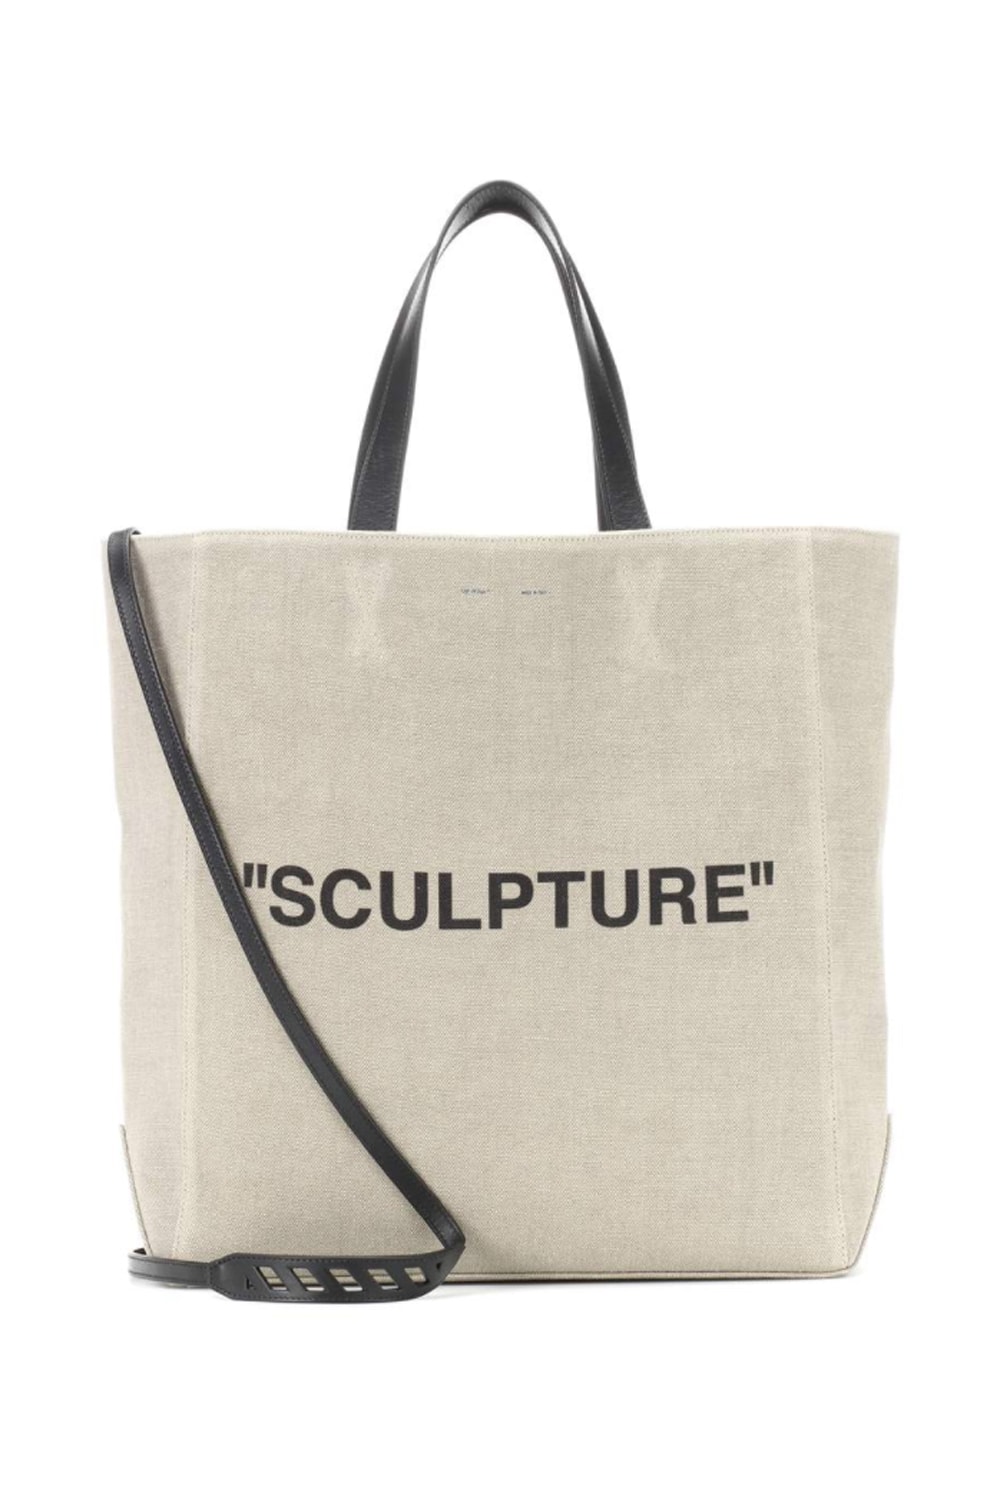 Off-White Neutral Sculpture Canvas Tote Bag, $1,773, farfetch.com